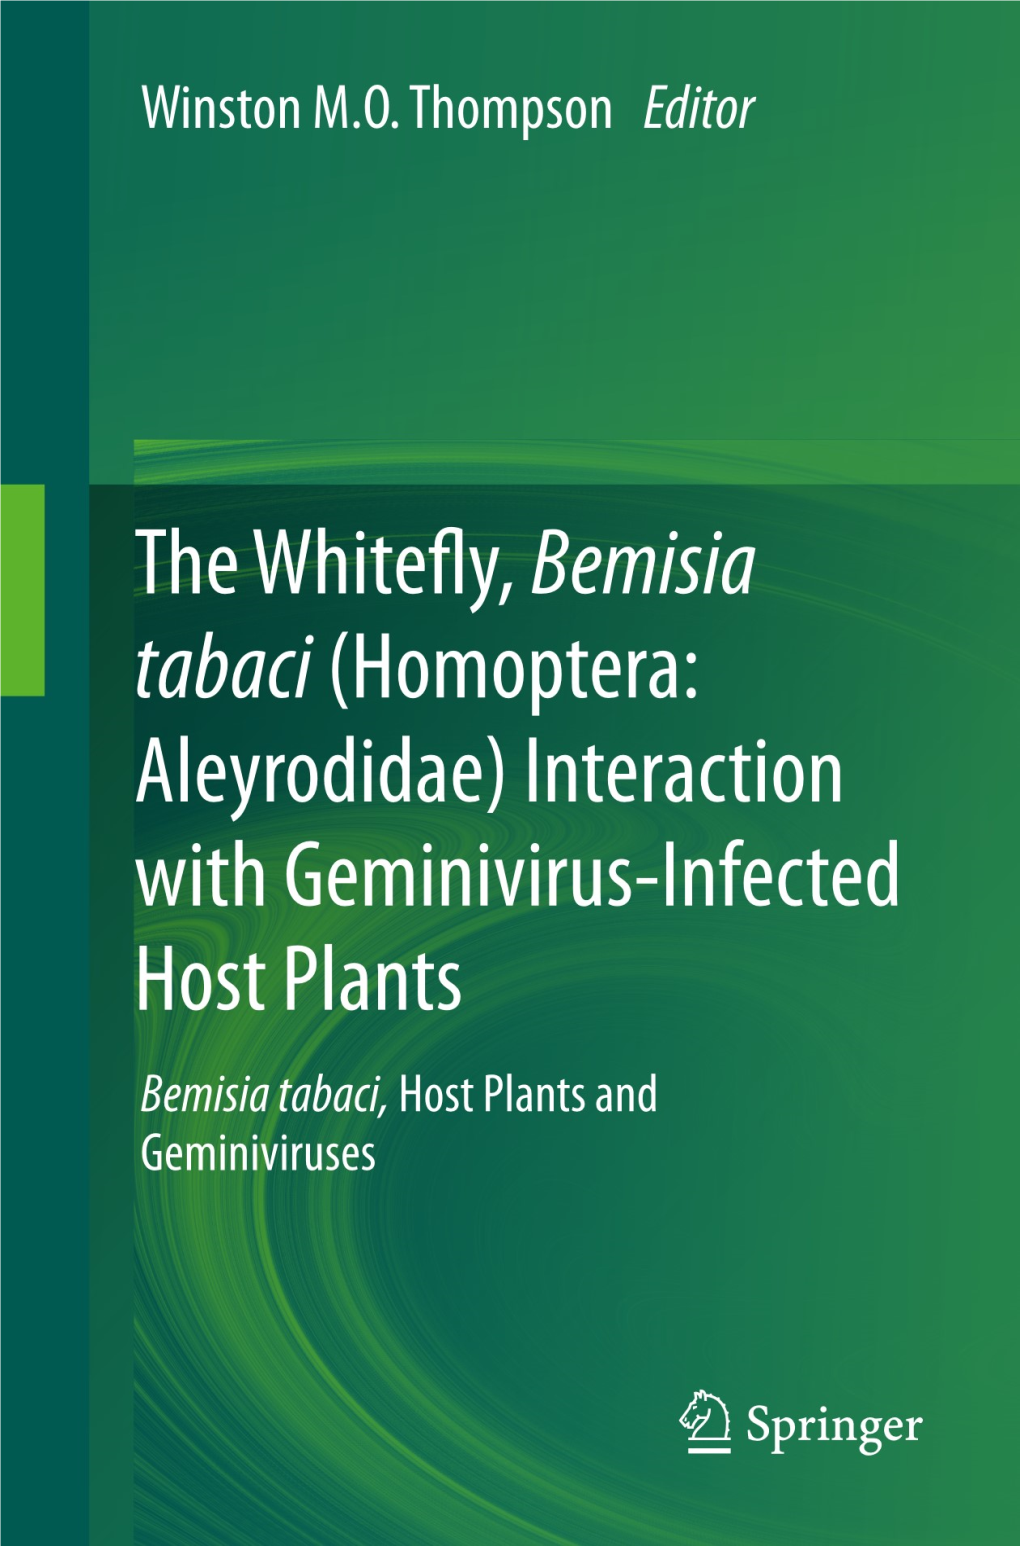 Bemisia Tabaci (Homoptera: Aleyrodidae) Interaction with Geminivirus-Infected Host Plants